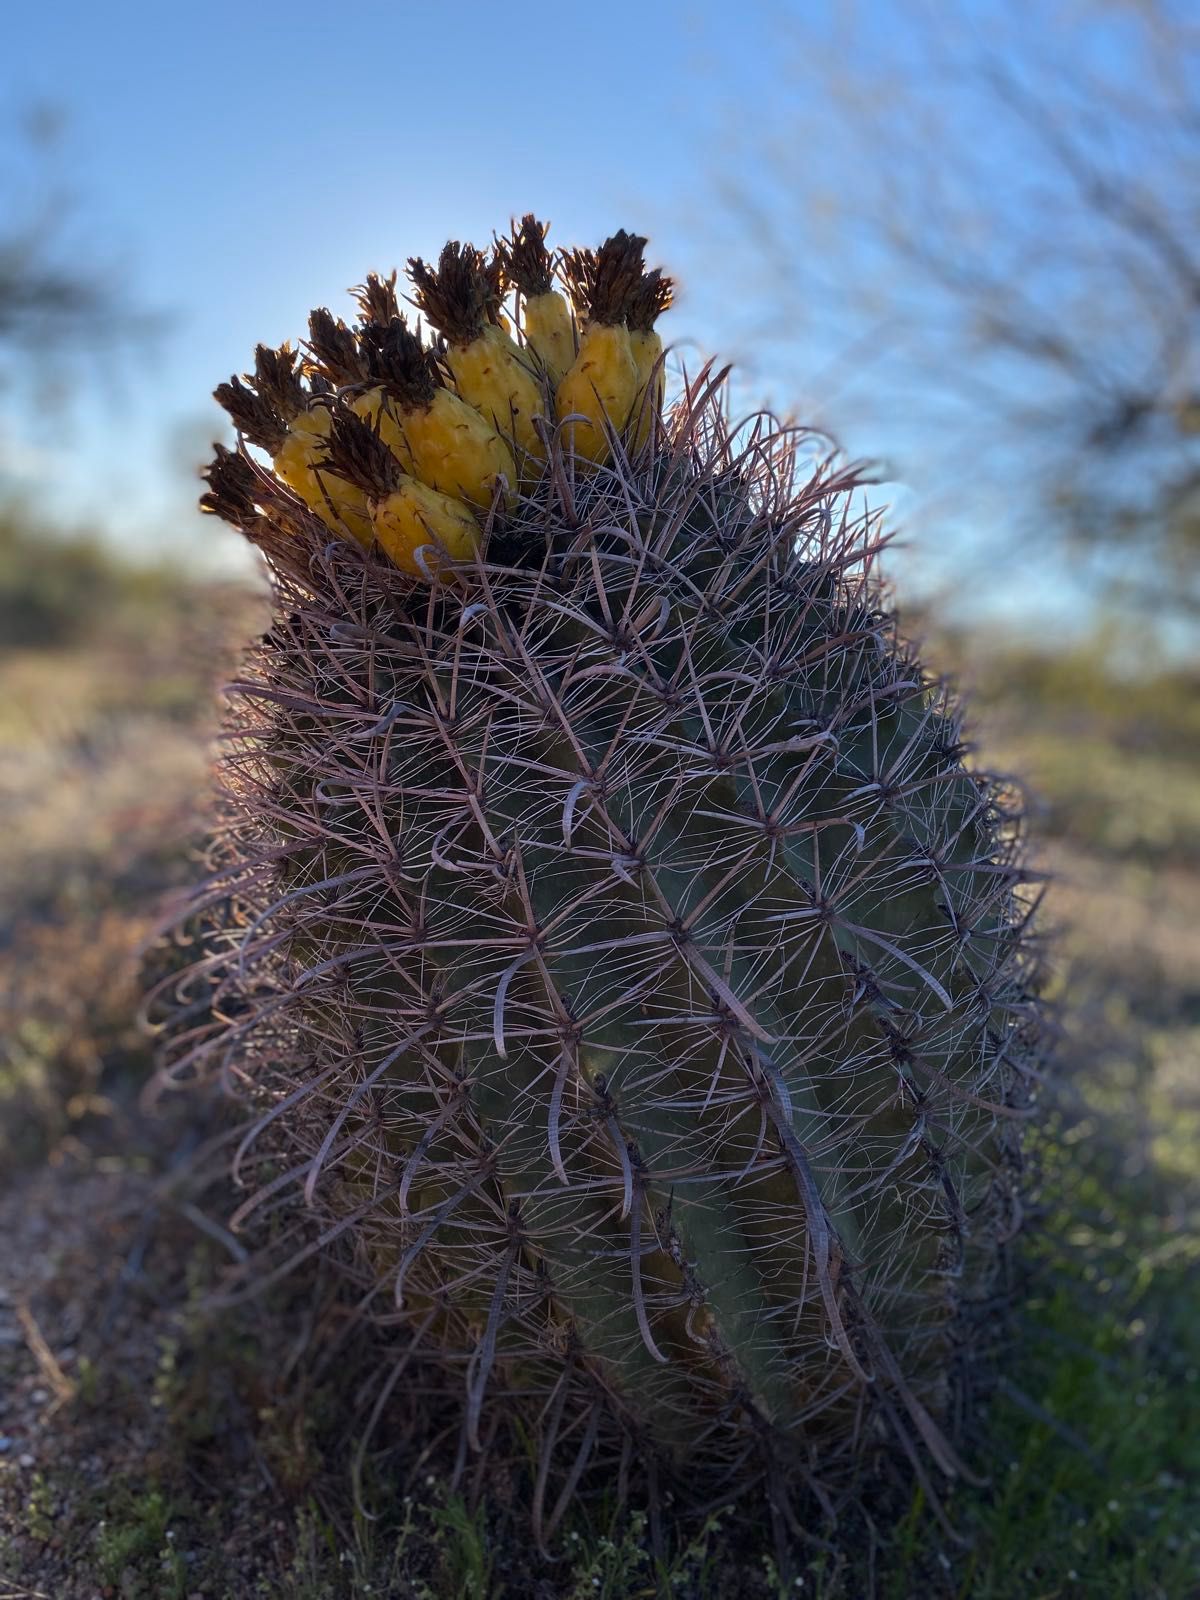 The bloom is coming… Barrel cacti in Arizona Sonoran desert near Phoenix.